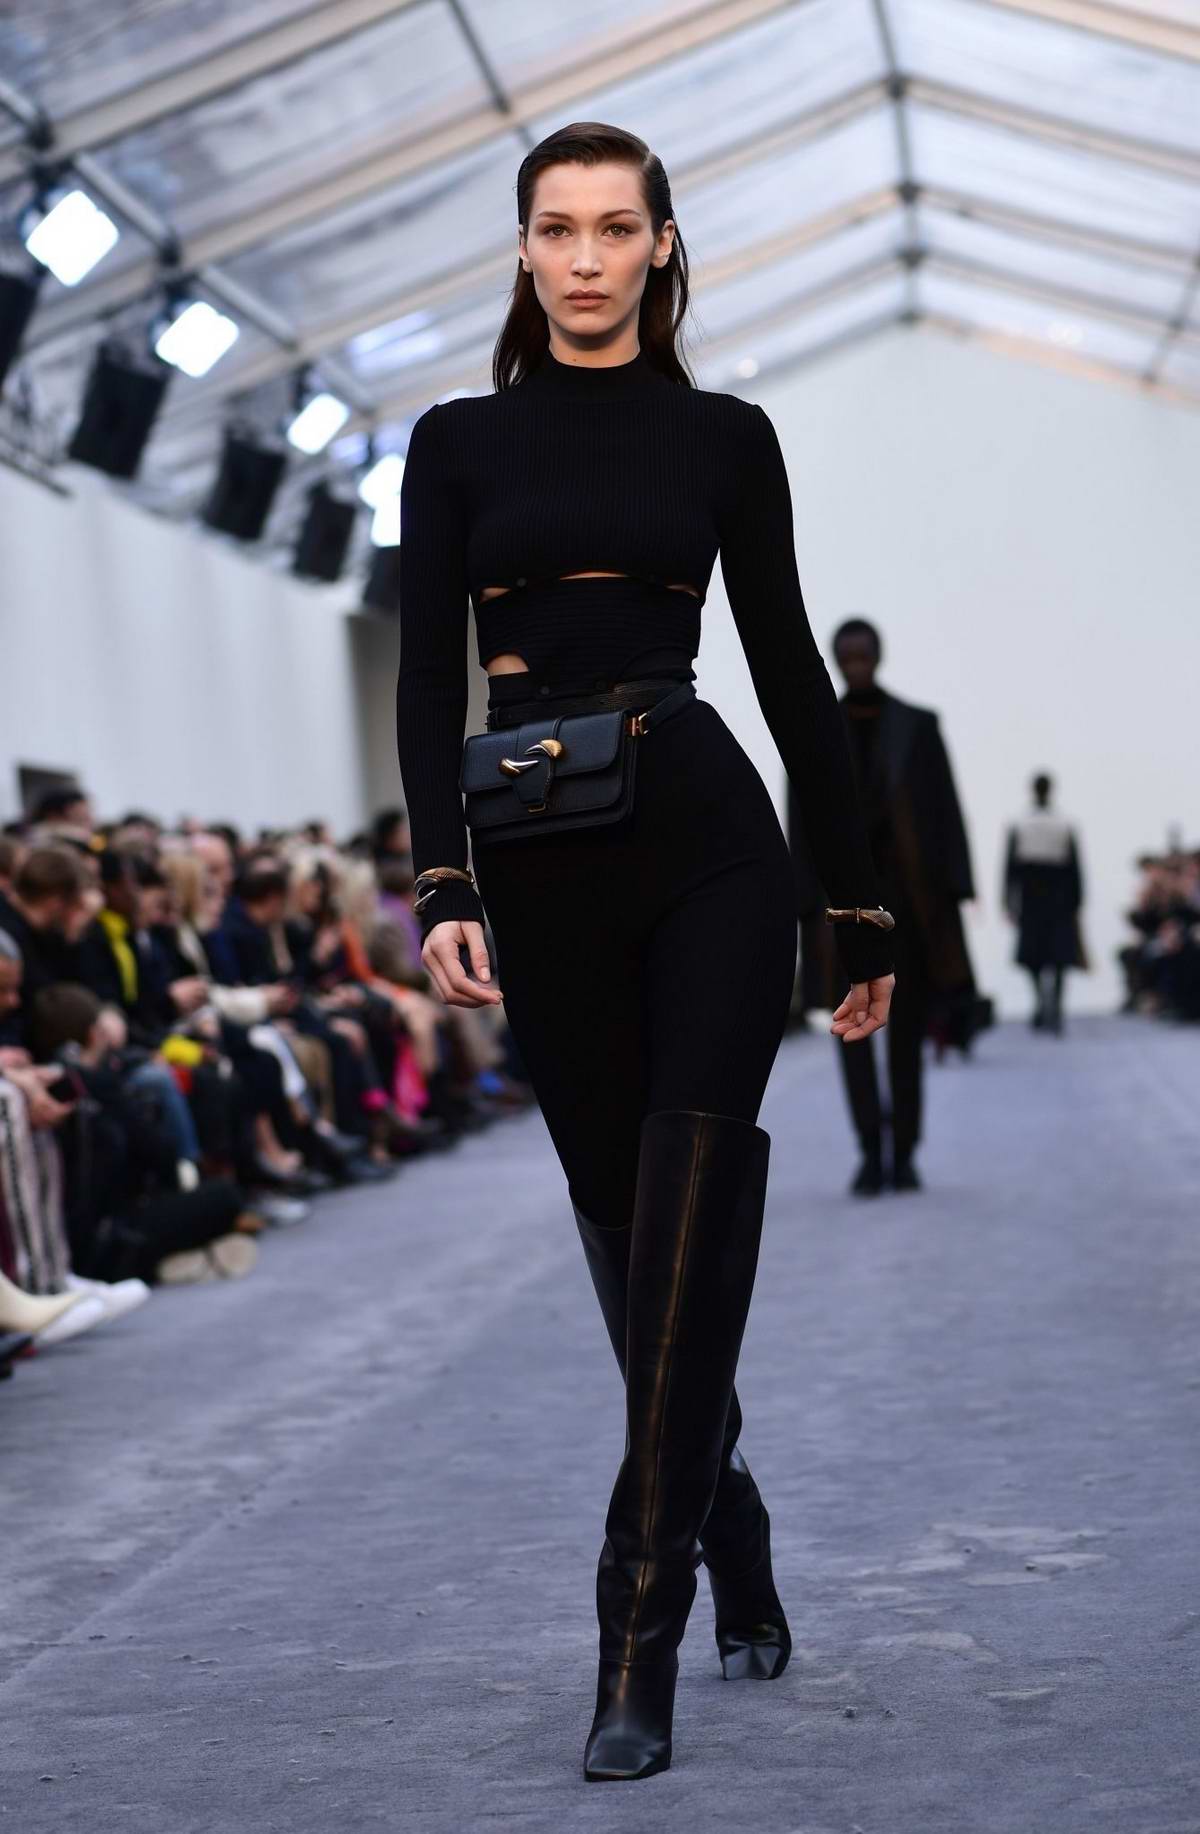 bella hadid walks the runway at the roberto cavalli fashion show during